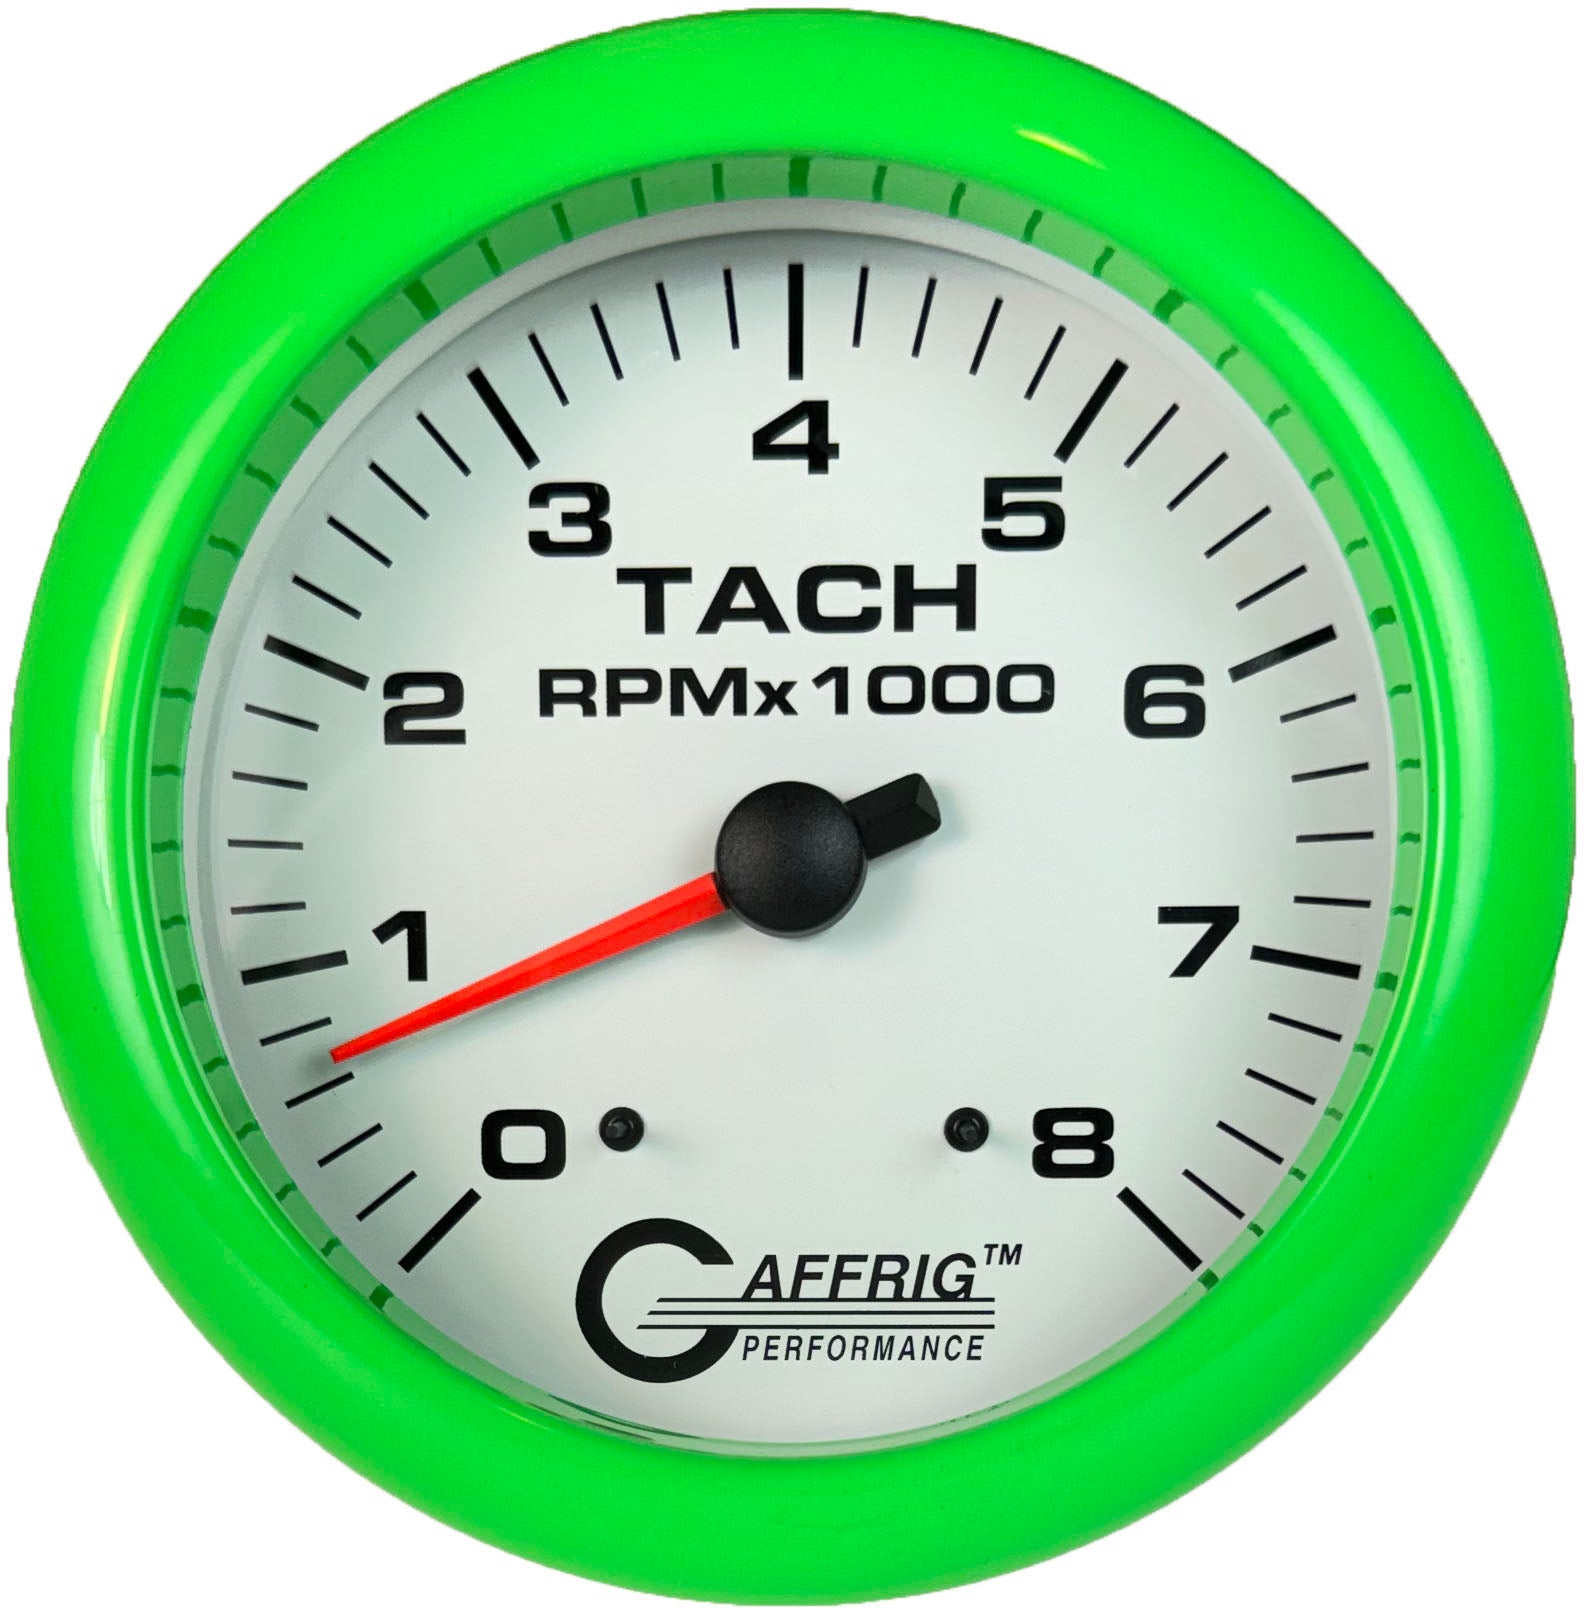 GAFFRIG PART #10019 4 5/8 INCH ELECTRIC TACHOMETER GAUGE 0-8000 RPM WHITE LIME GREEN